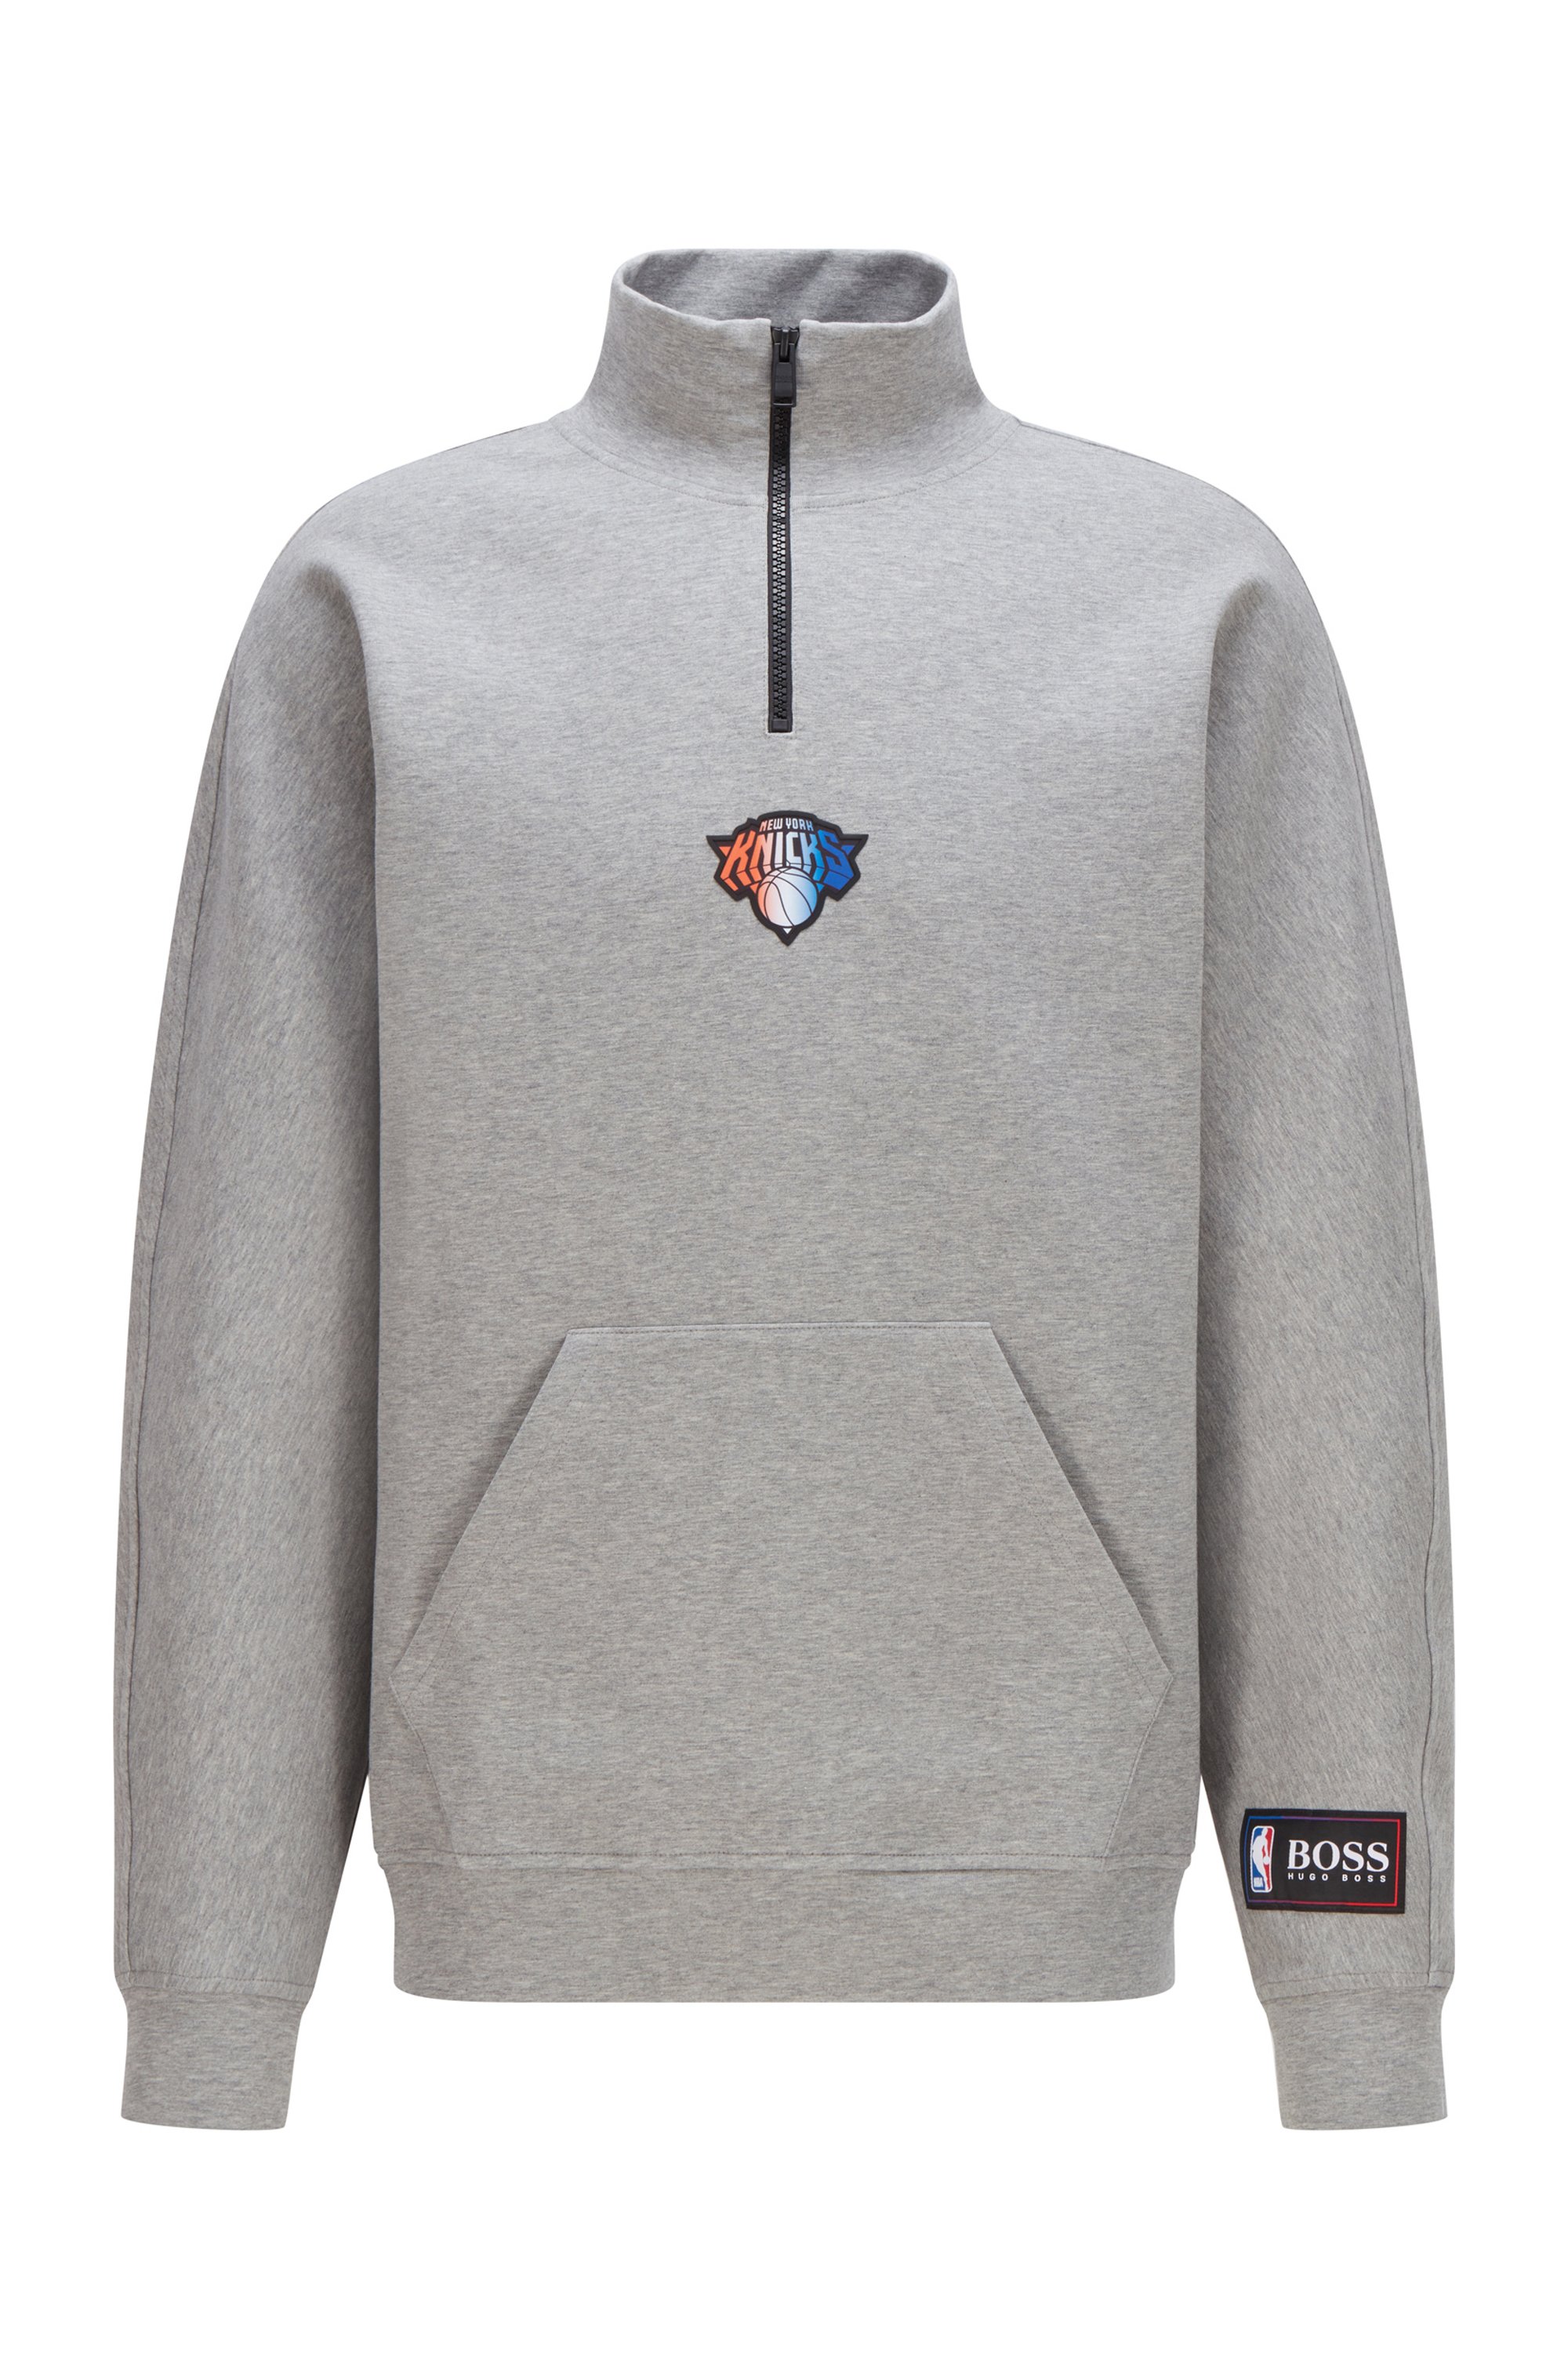 BOSS x NBA zip-neck sweatshirt with collaborative branding, NBA Knicks